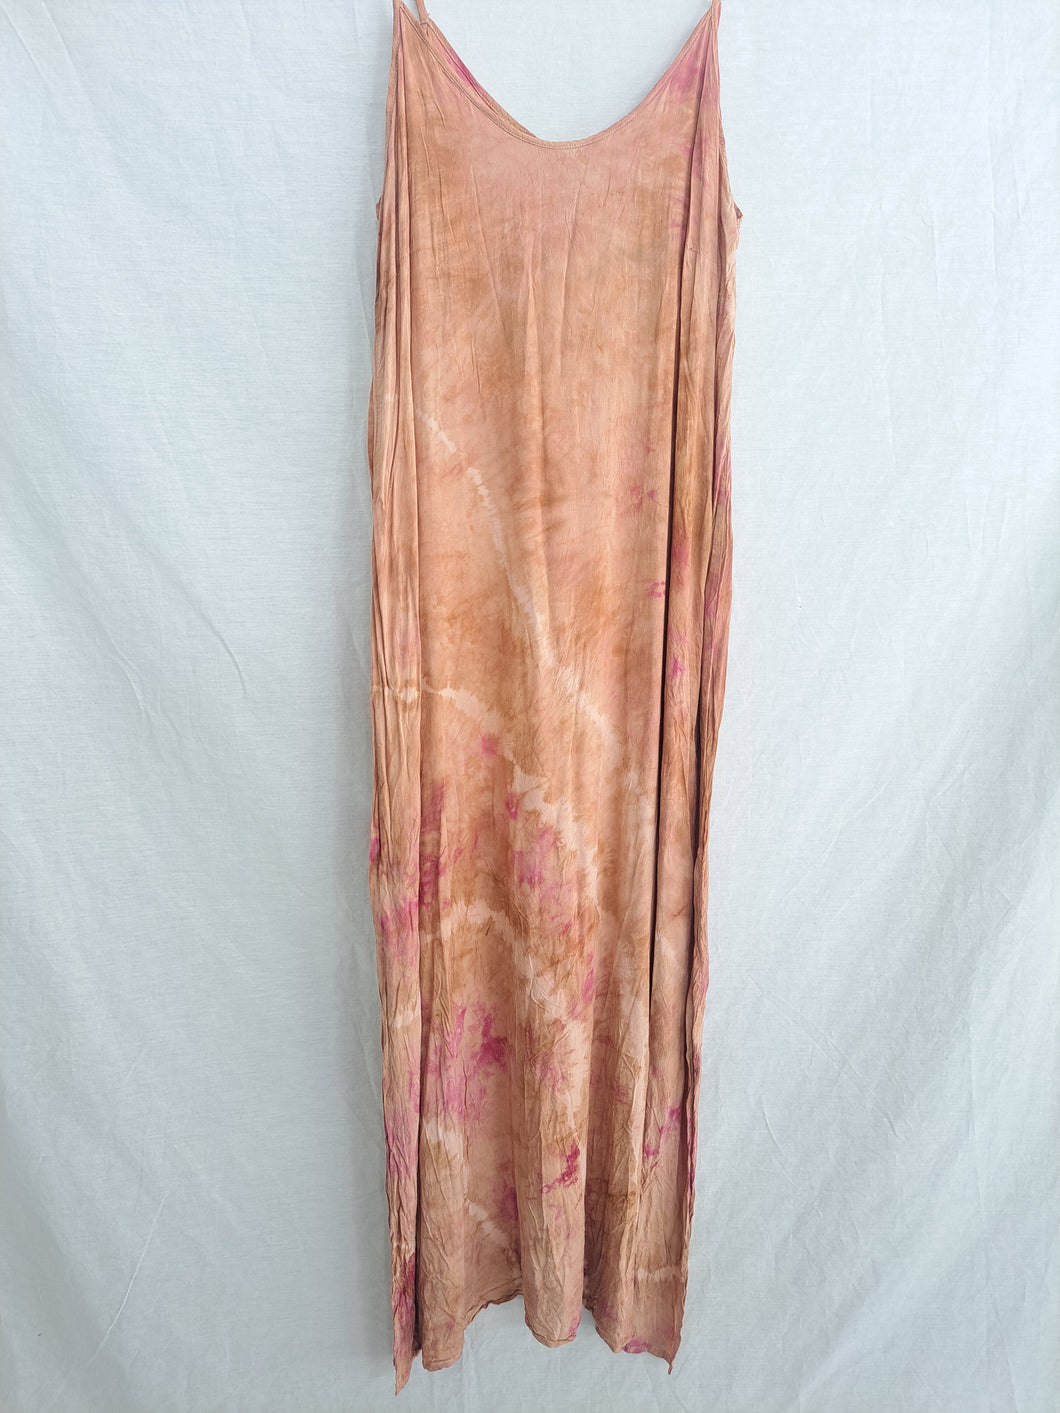 Althea Slip Dress, size L (botanically dyed with Avocado)